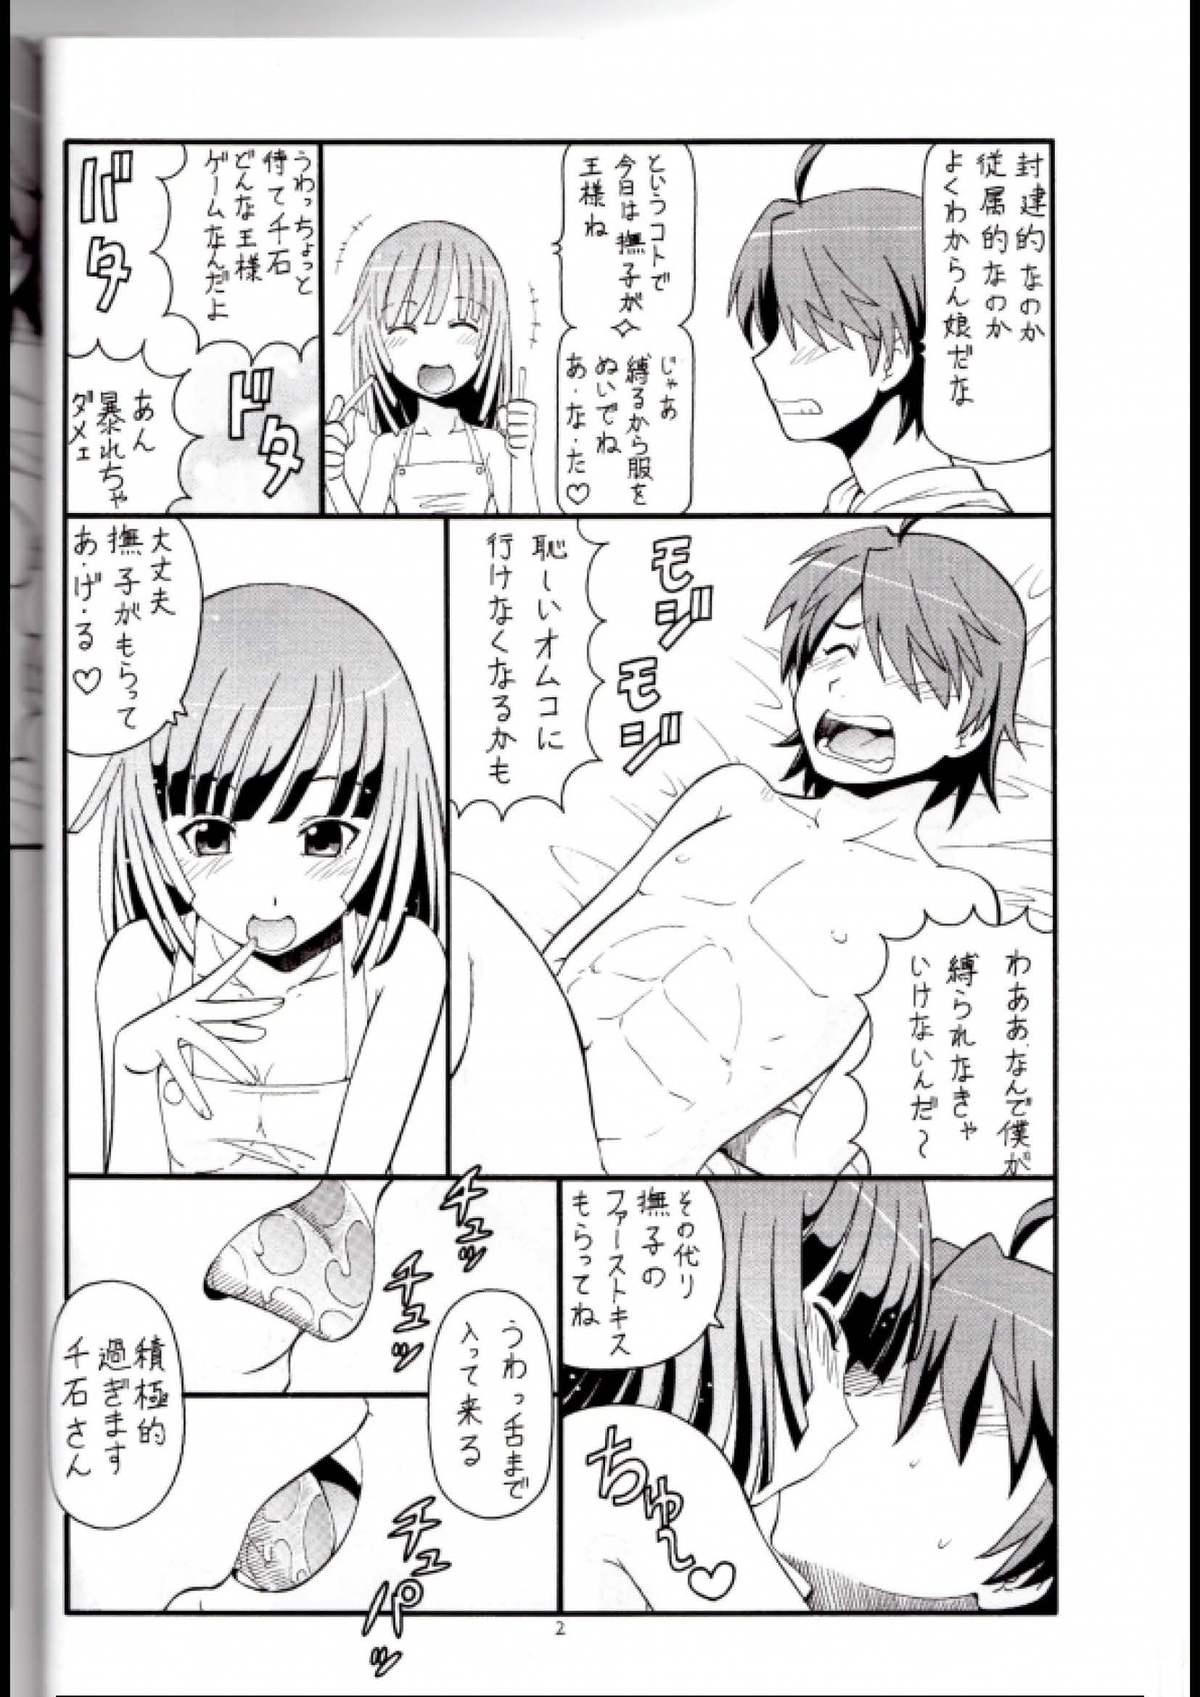 Wild Hito ni Hakanai to Kaite "Araragi" to Yomu 2&3 - Bakemonogatari Magrinha - Page 3